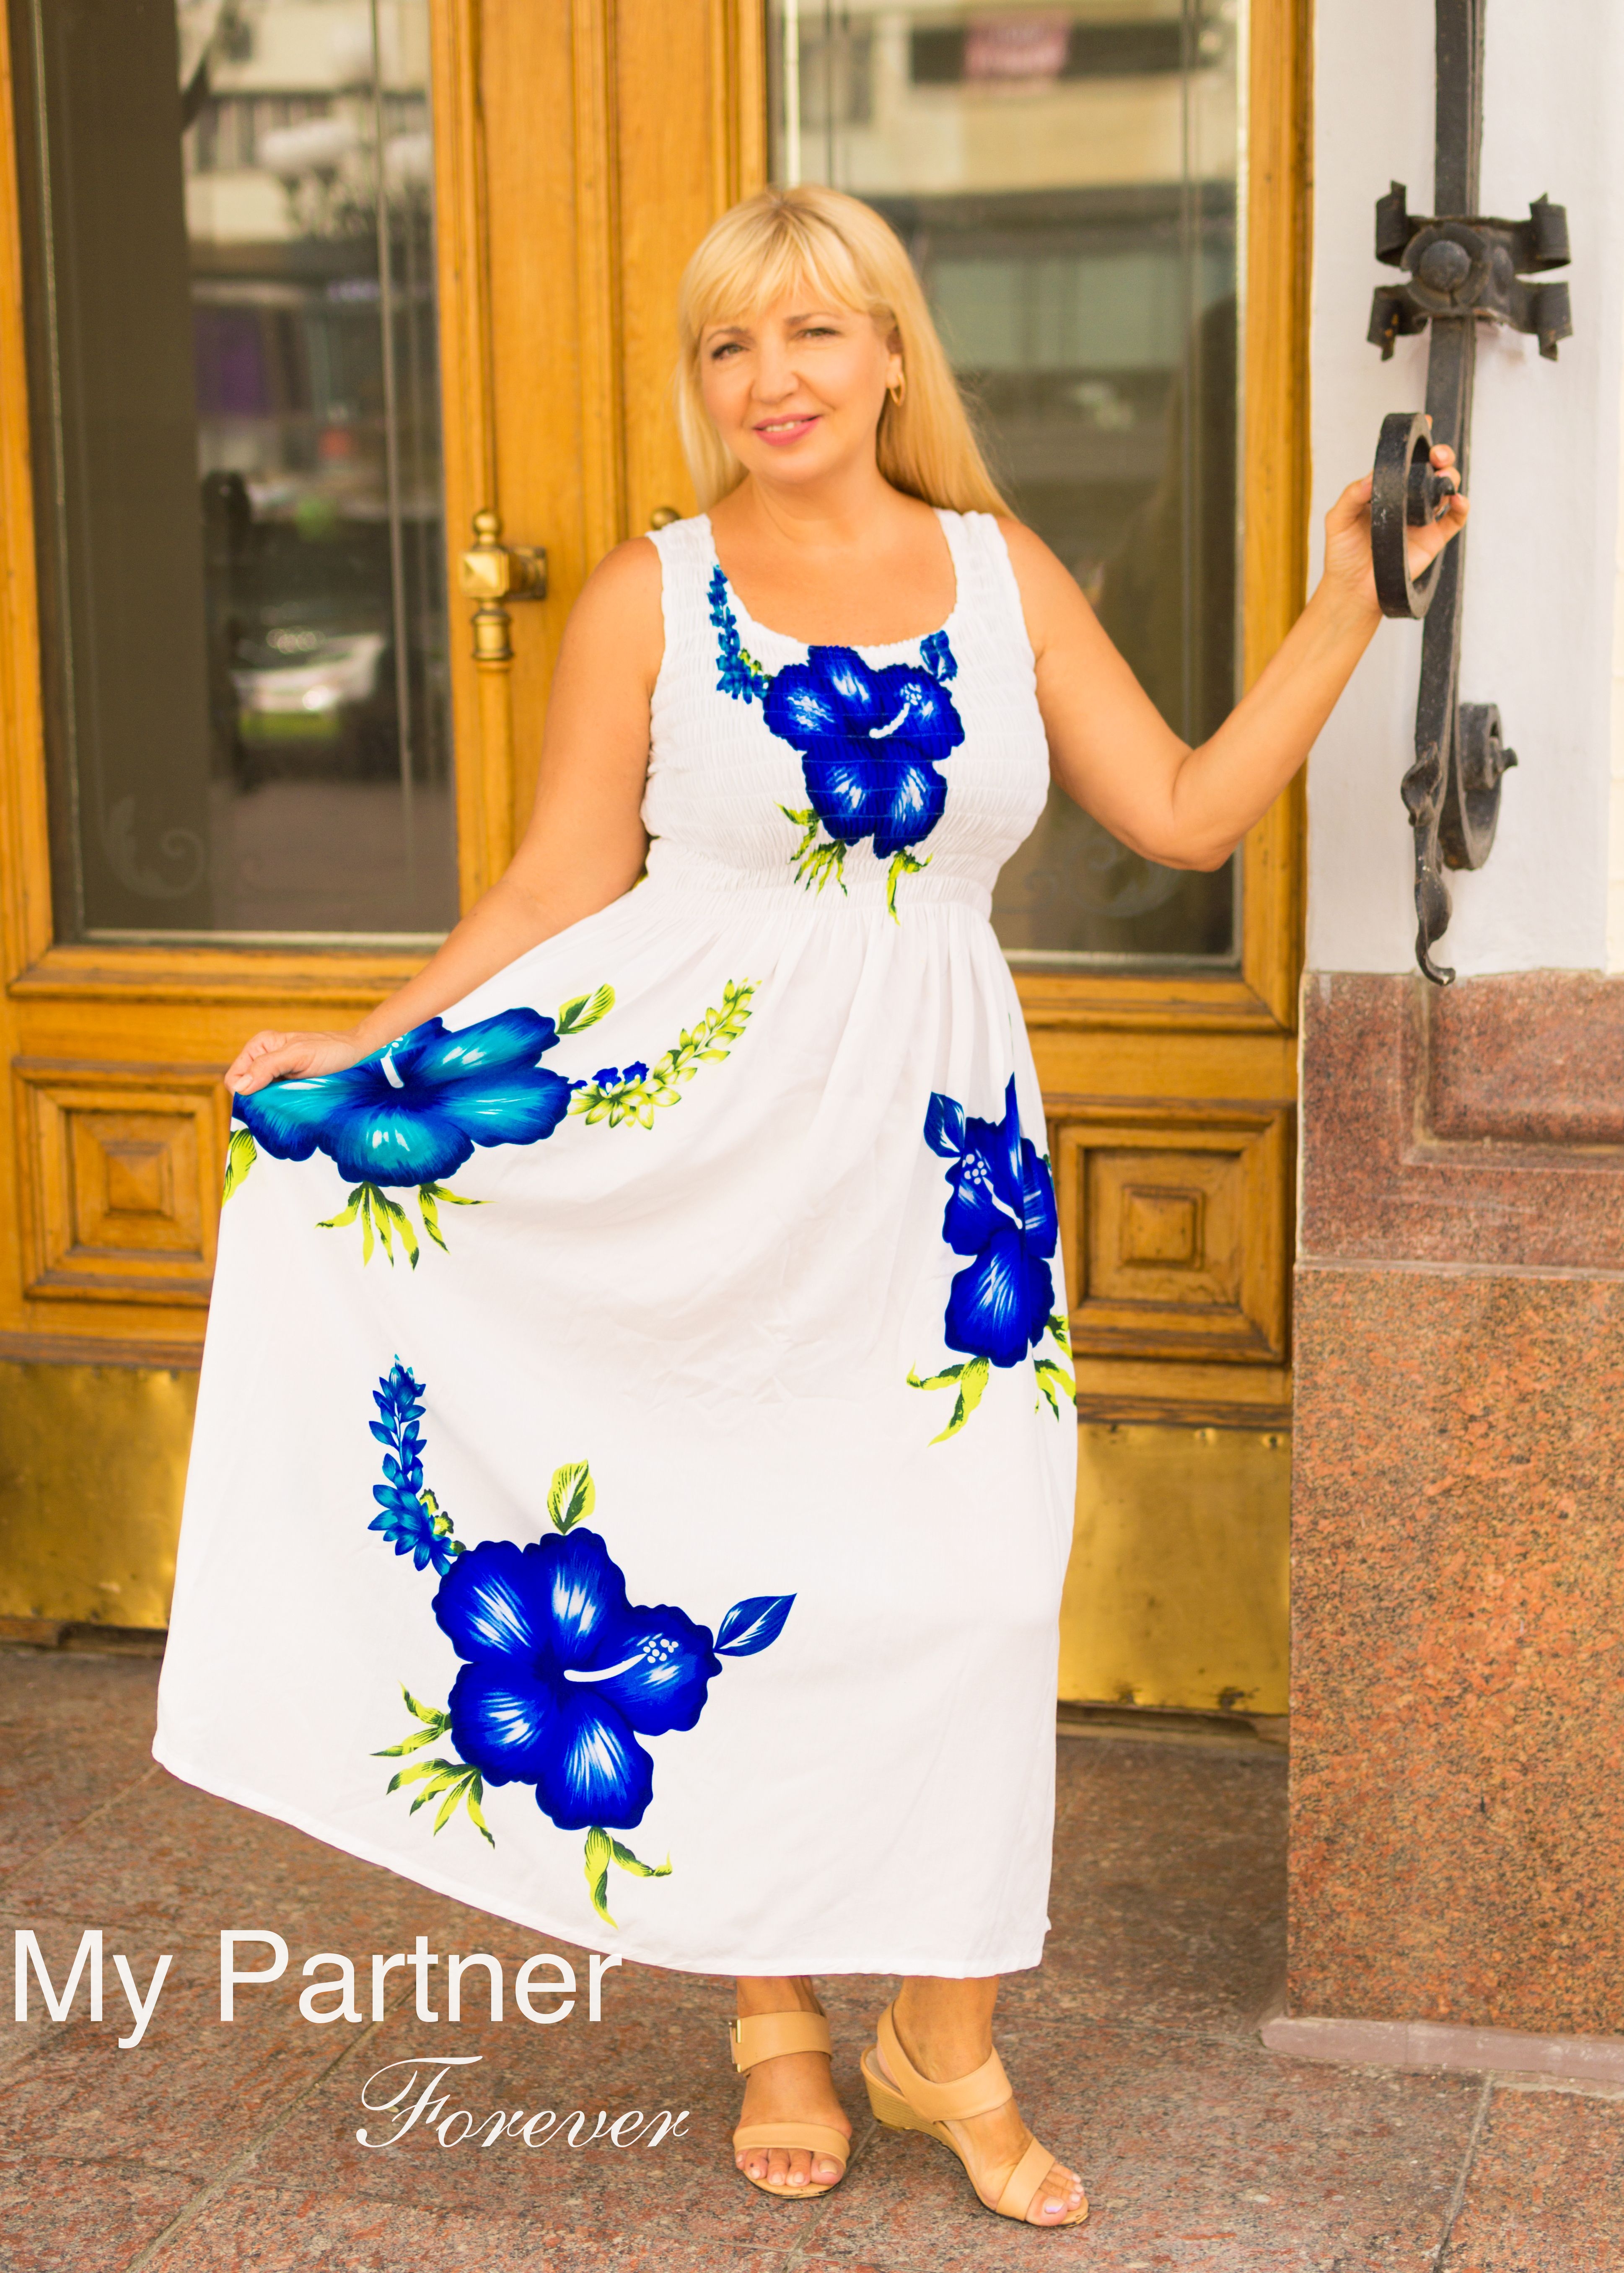 Meet Beautiful Ukrainian Lady Elena from Odessa, Ukraine